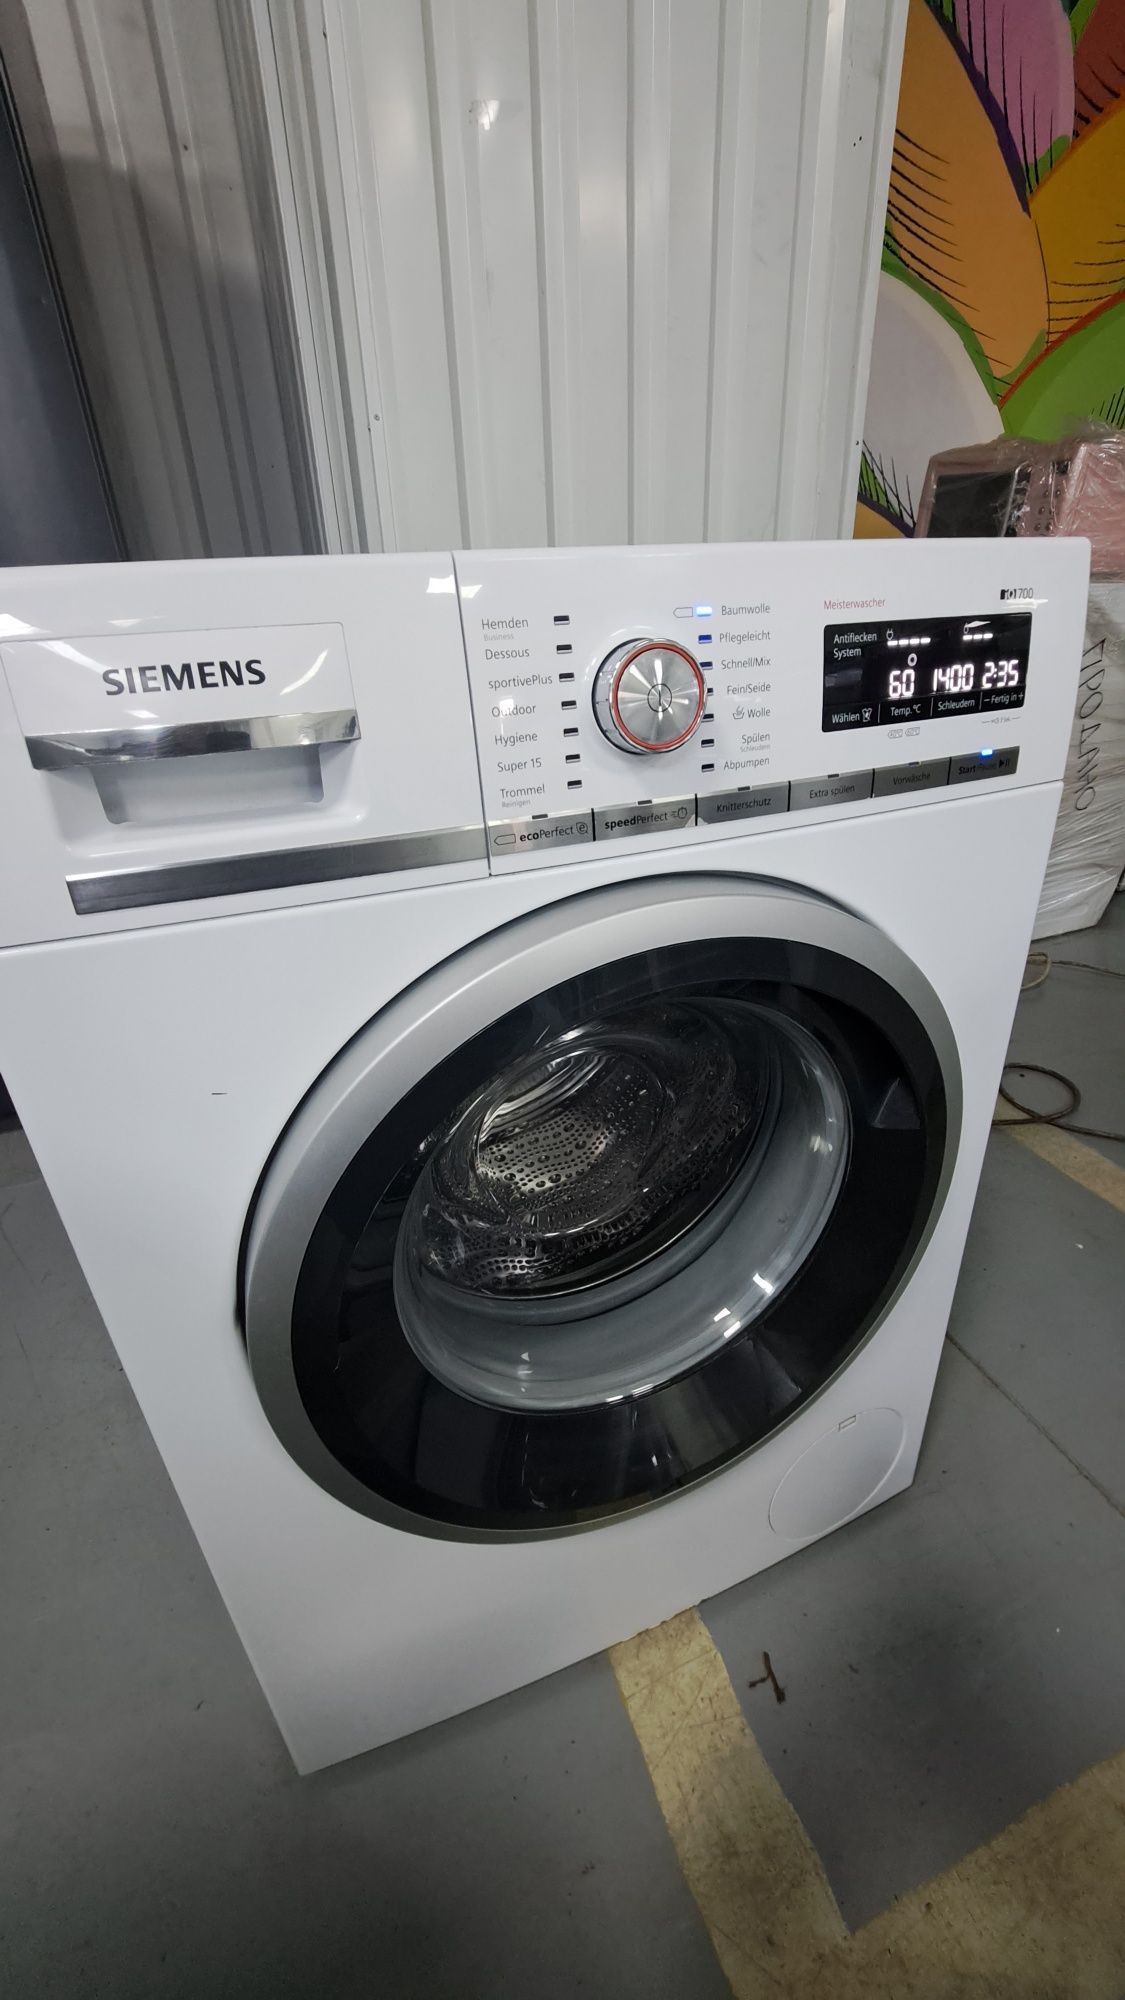 Пральна/стиральная машина Siemens iq700 з Германії Гарантія